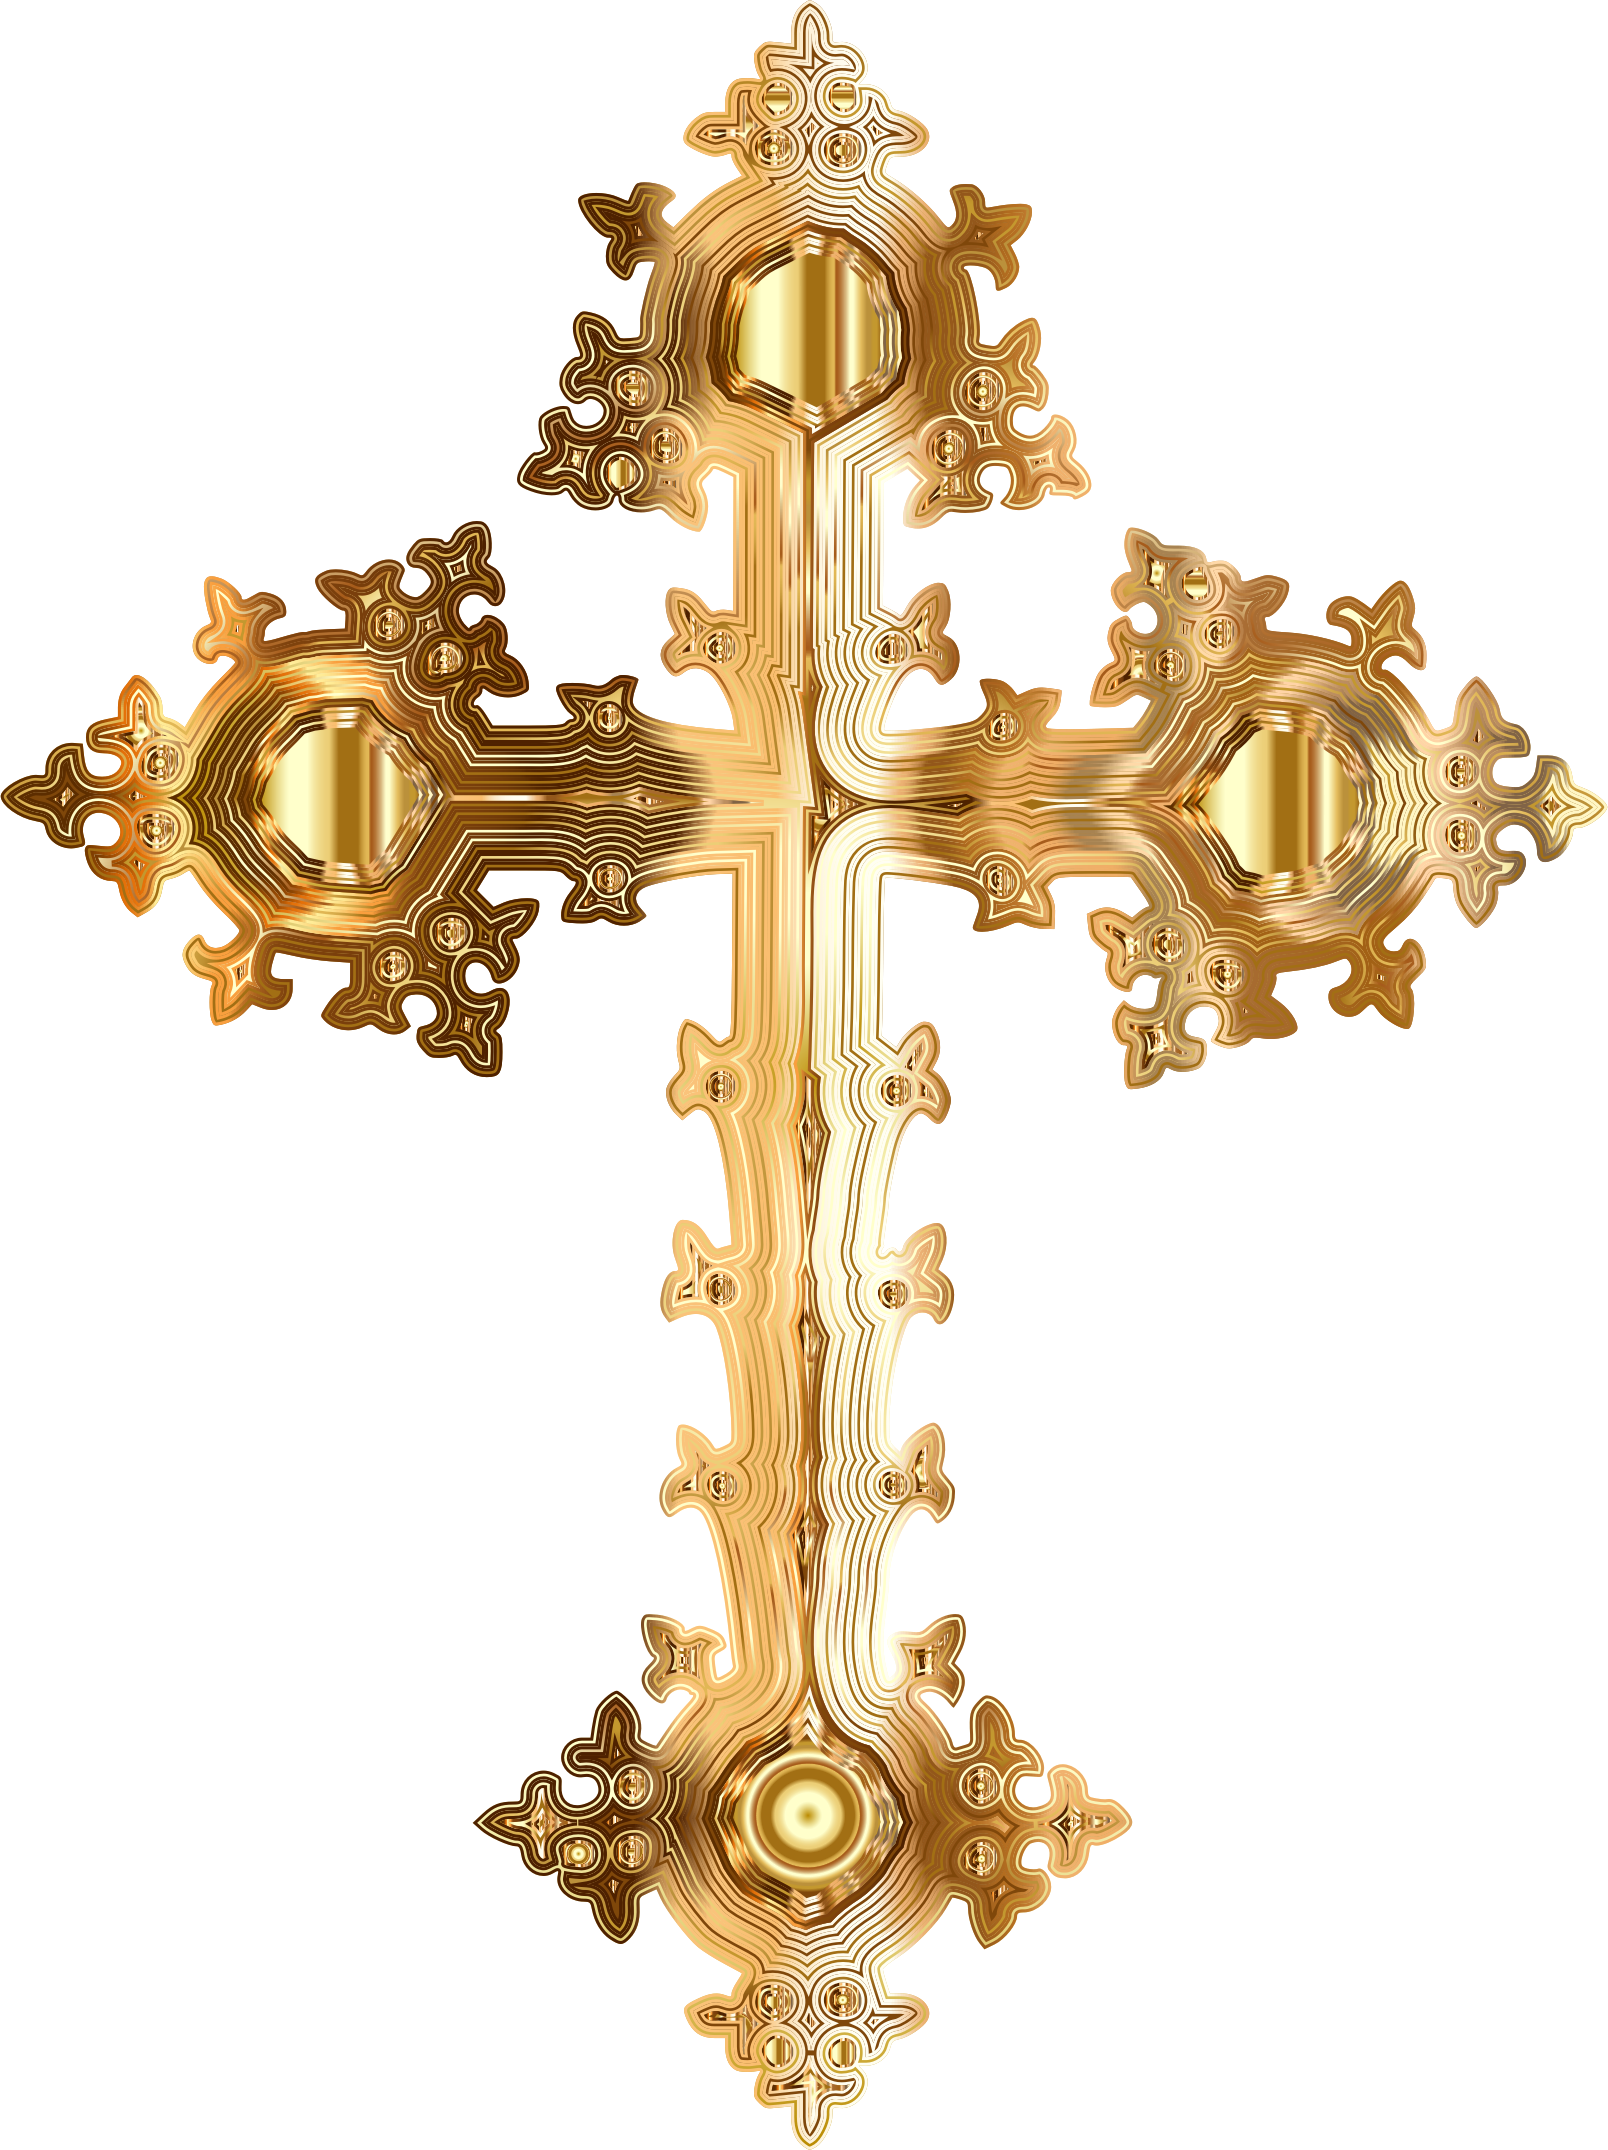 Golden Ornate Cross No Background By Gdj